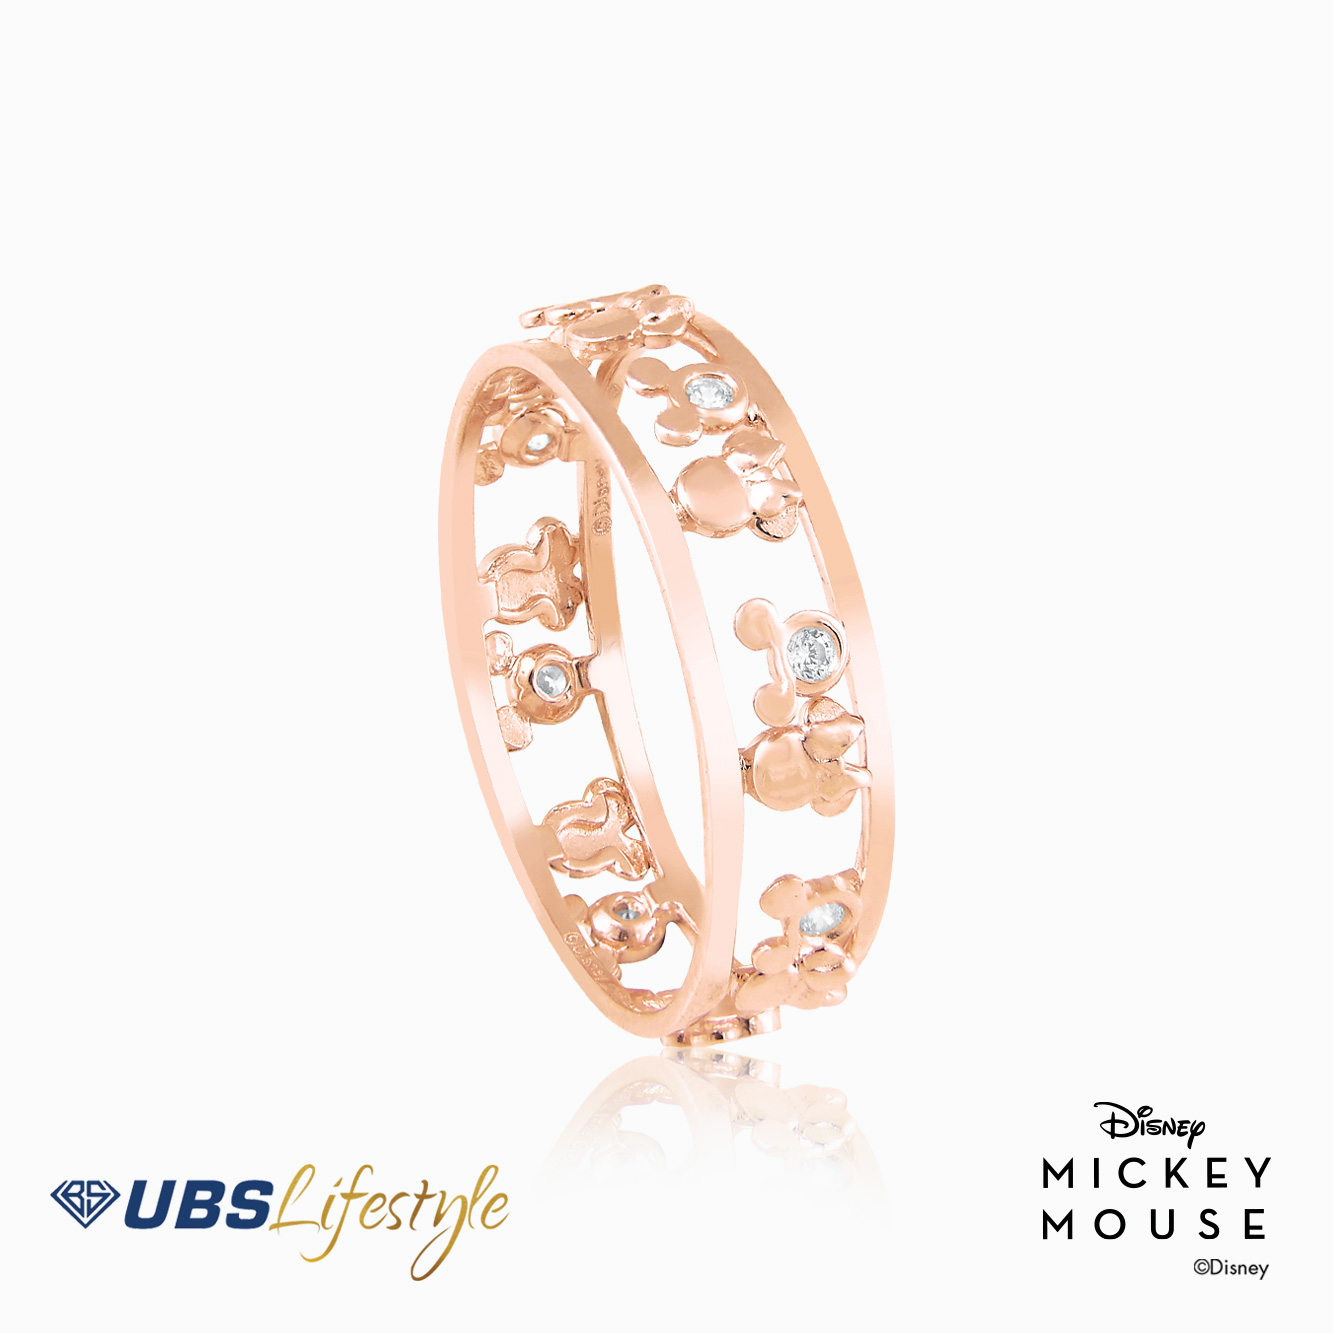 UBS Cincin Emas Disney Mickey Mouse - Ccy0114 - 17K